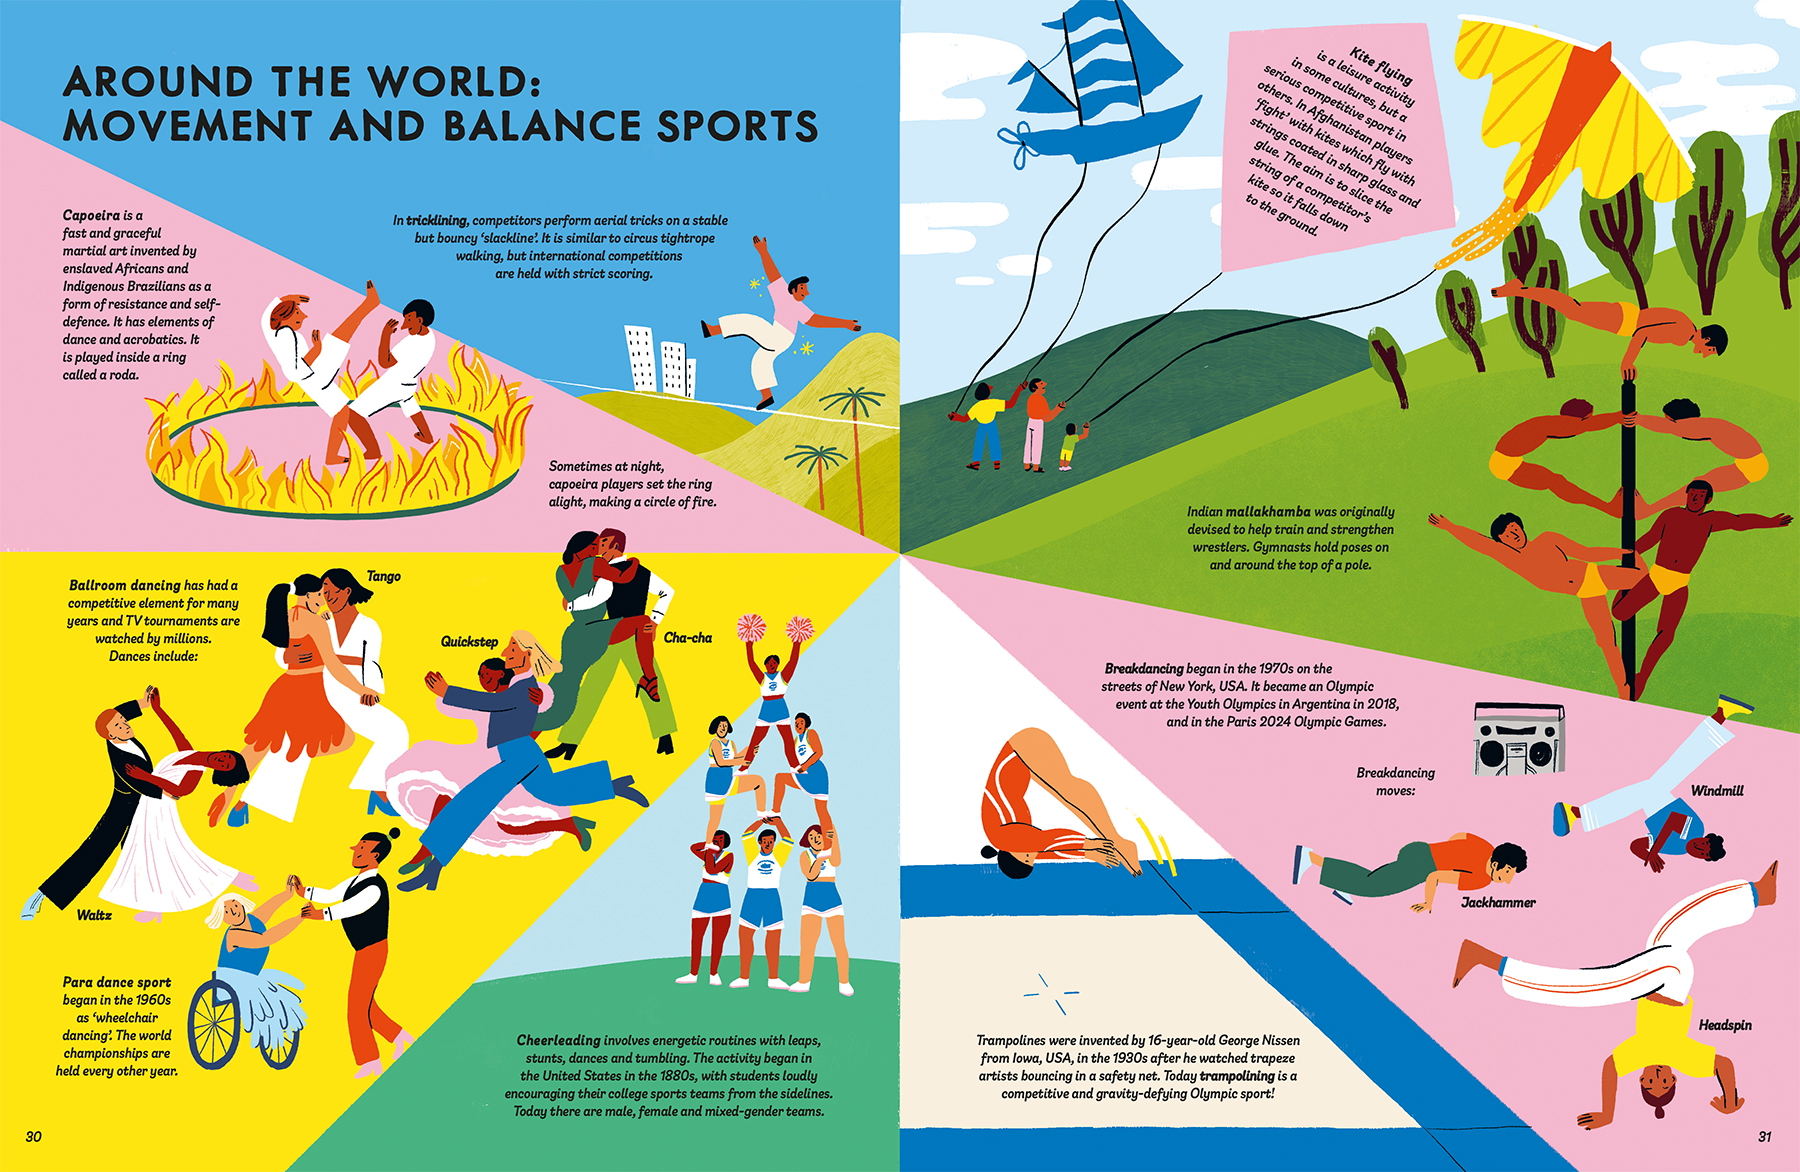 world-of-sport-non-fiction-book-illustration-tricklining-dance-tango-cheerleading-kite-mallakhamba-breakdancing-trampoline-violeta-noy